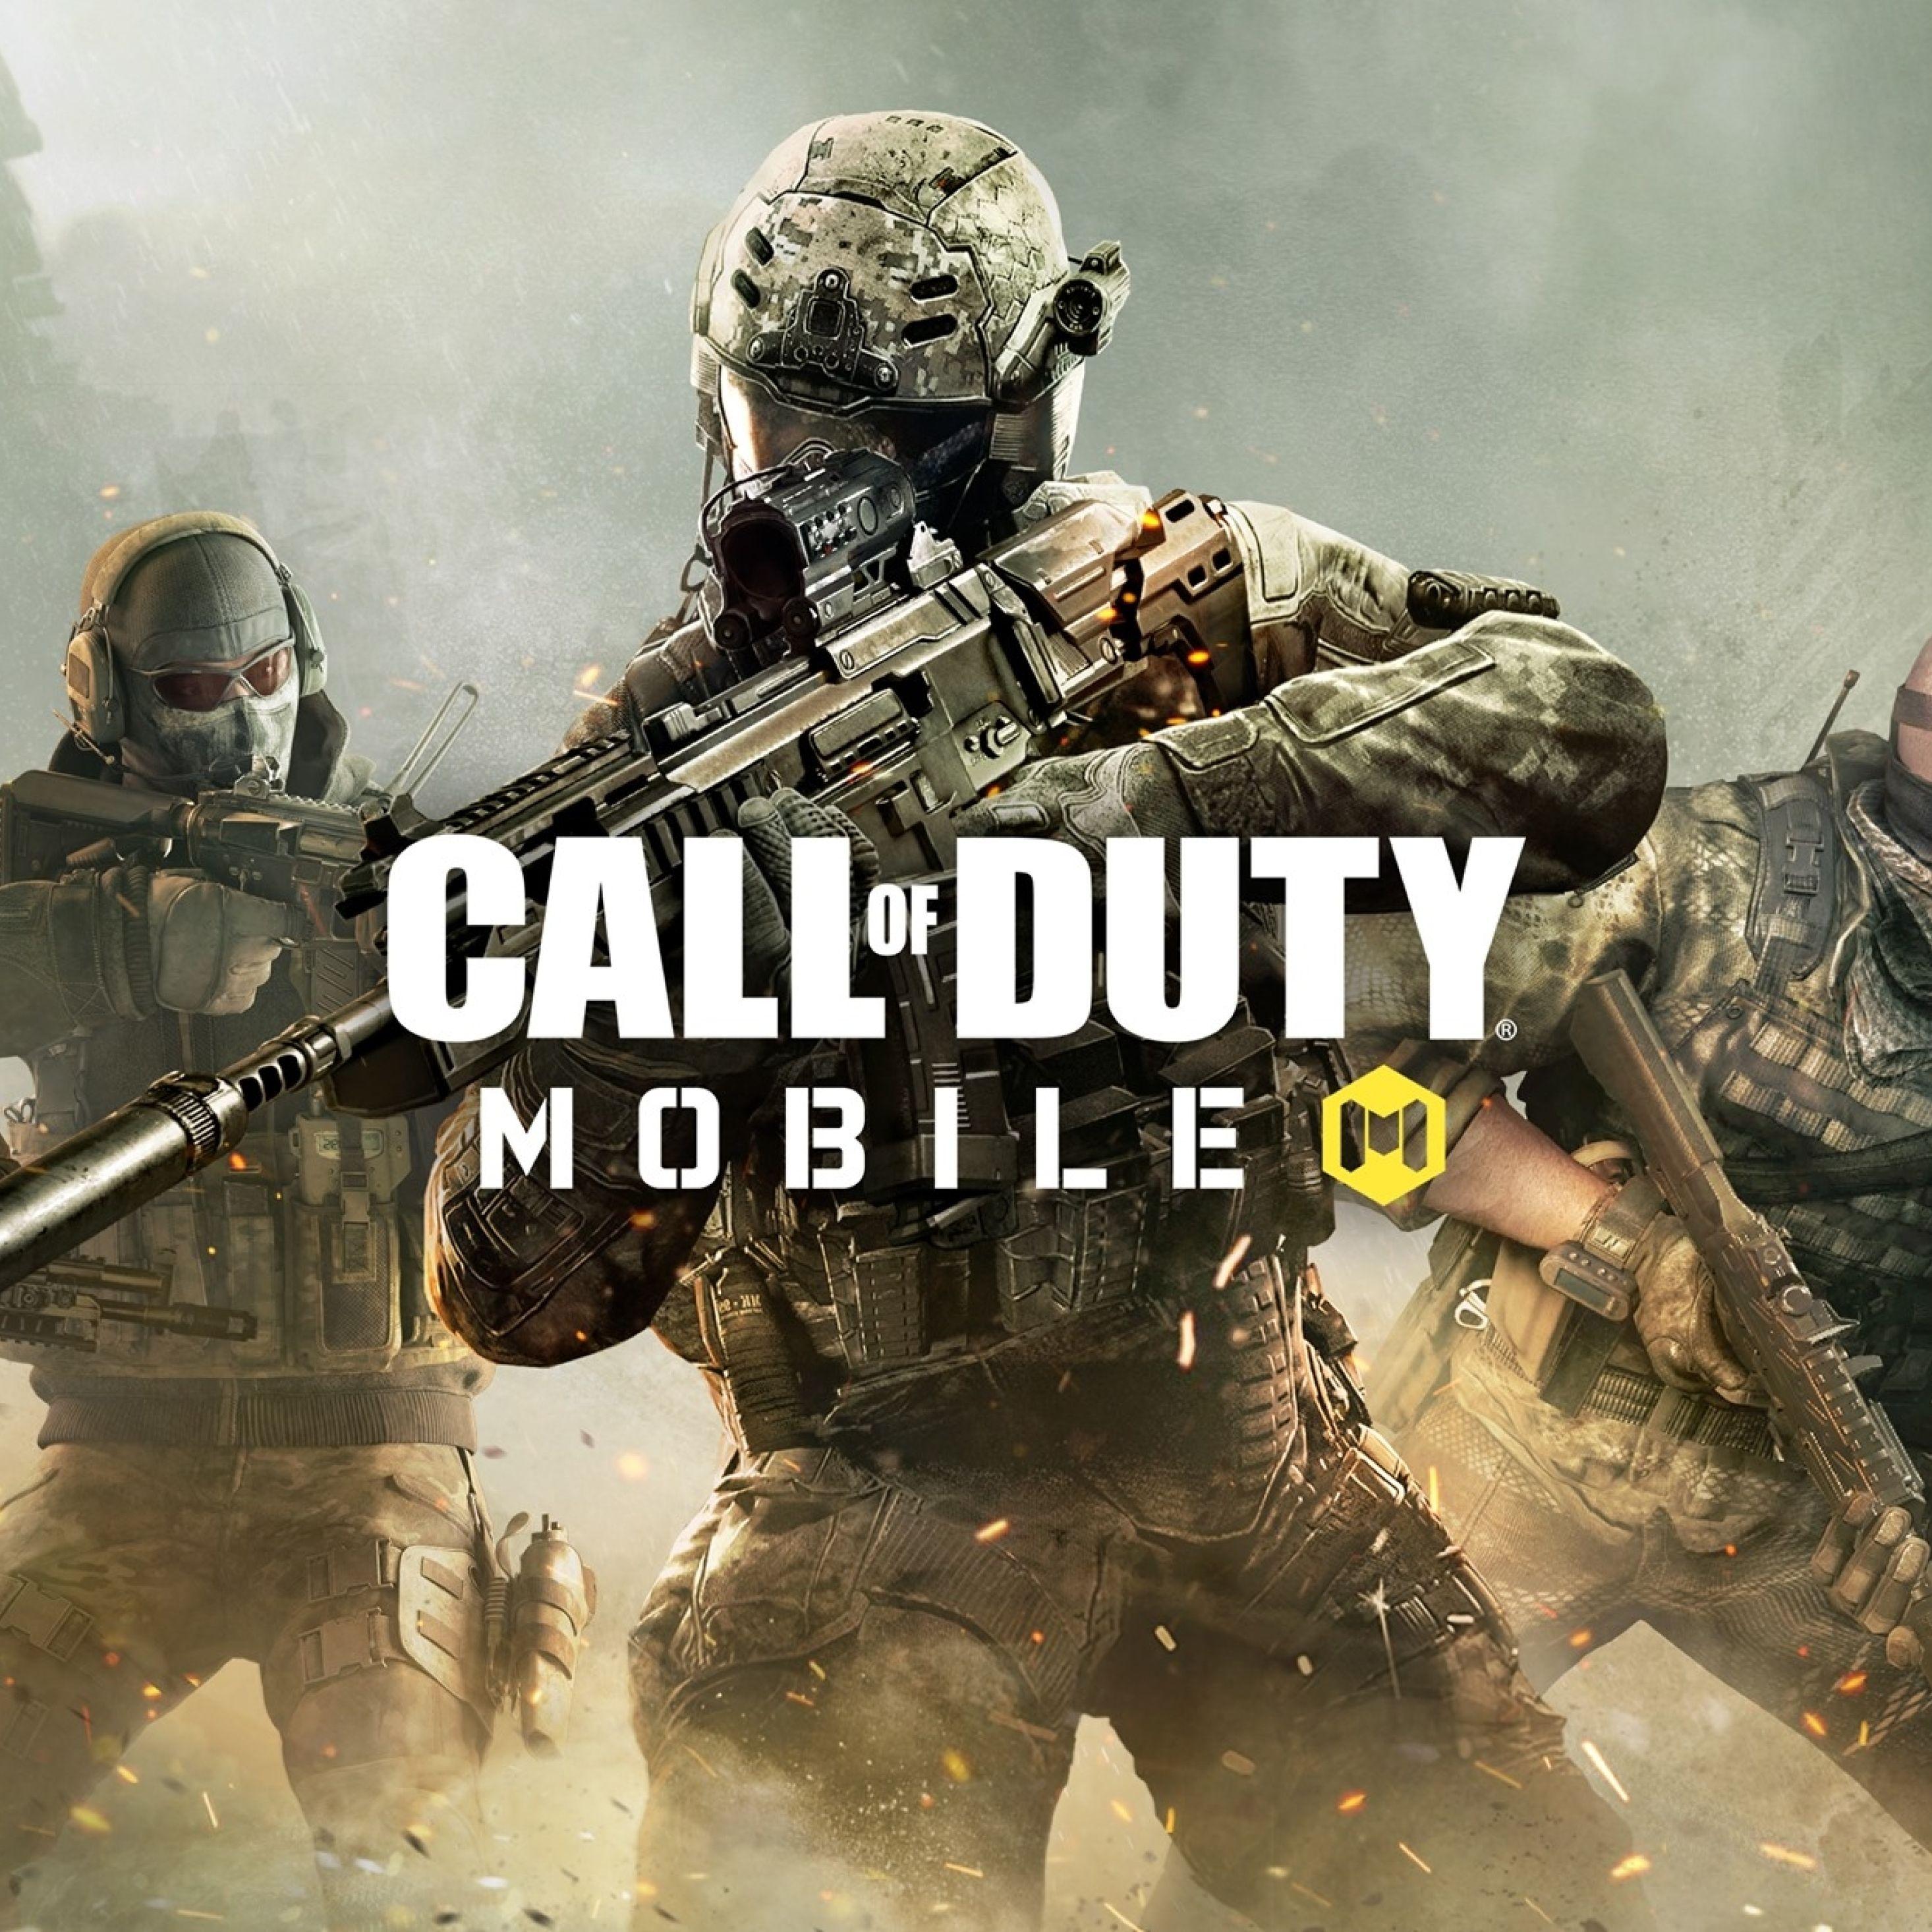 Call of Duty Mobile Wallpaper .wallpaperaccess.com